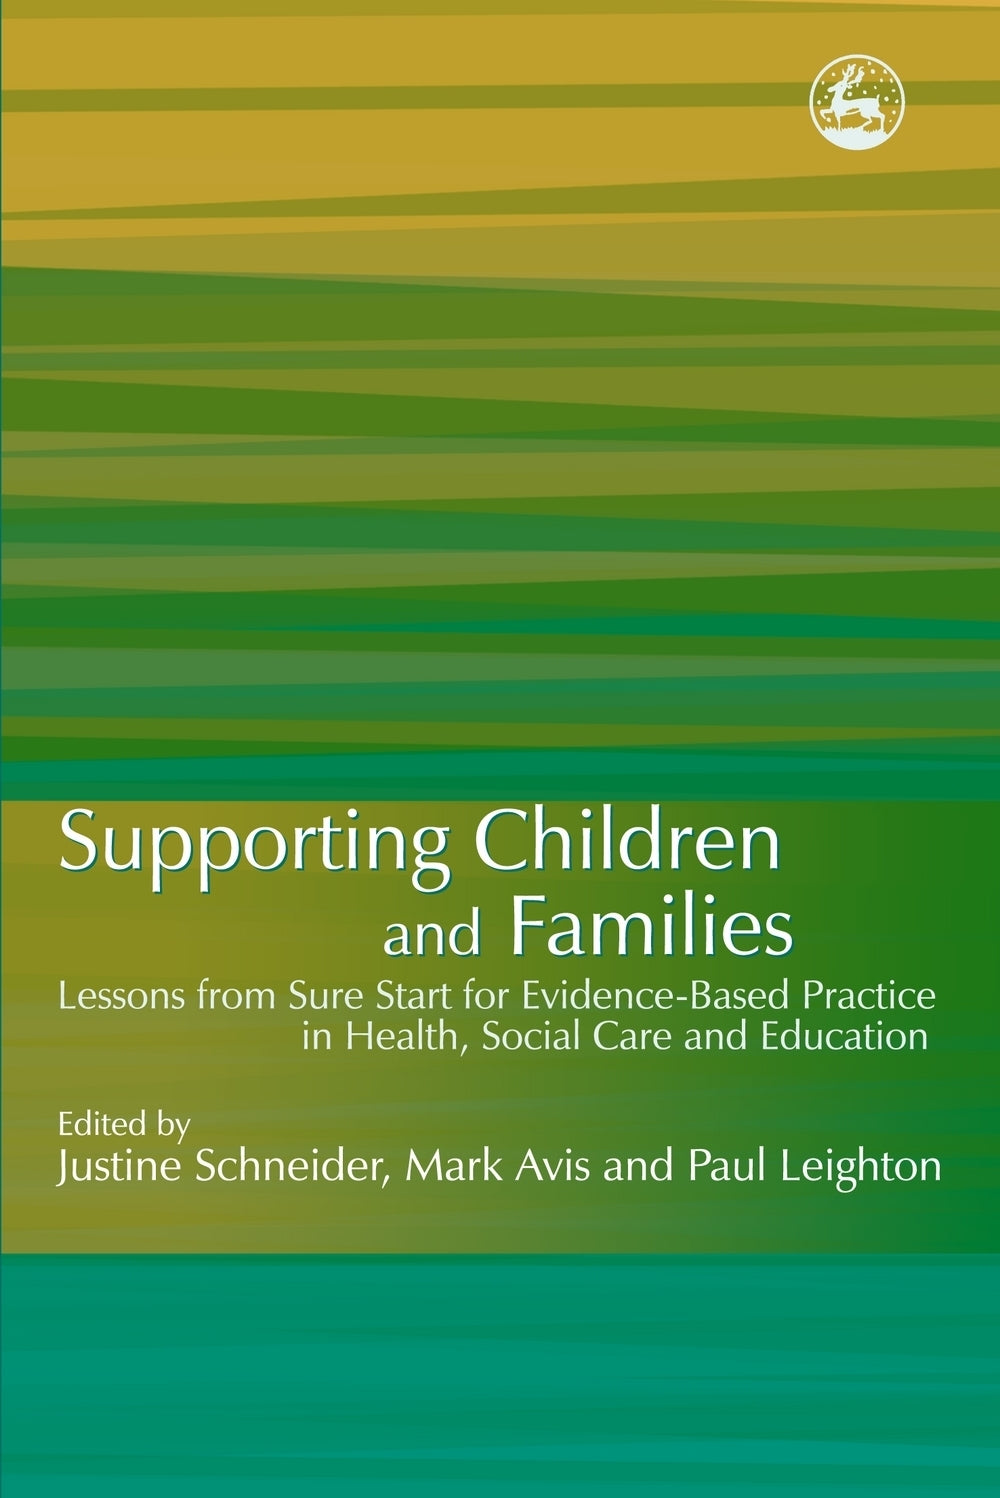 Supporting Children and Families by Mark Avis, Justine Schneider, Paul Leighton